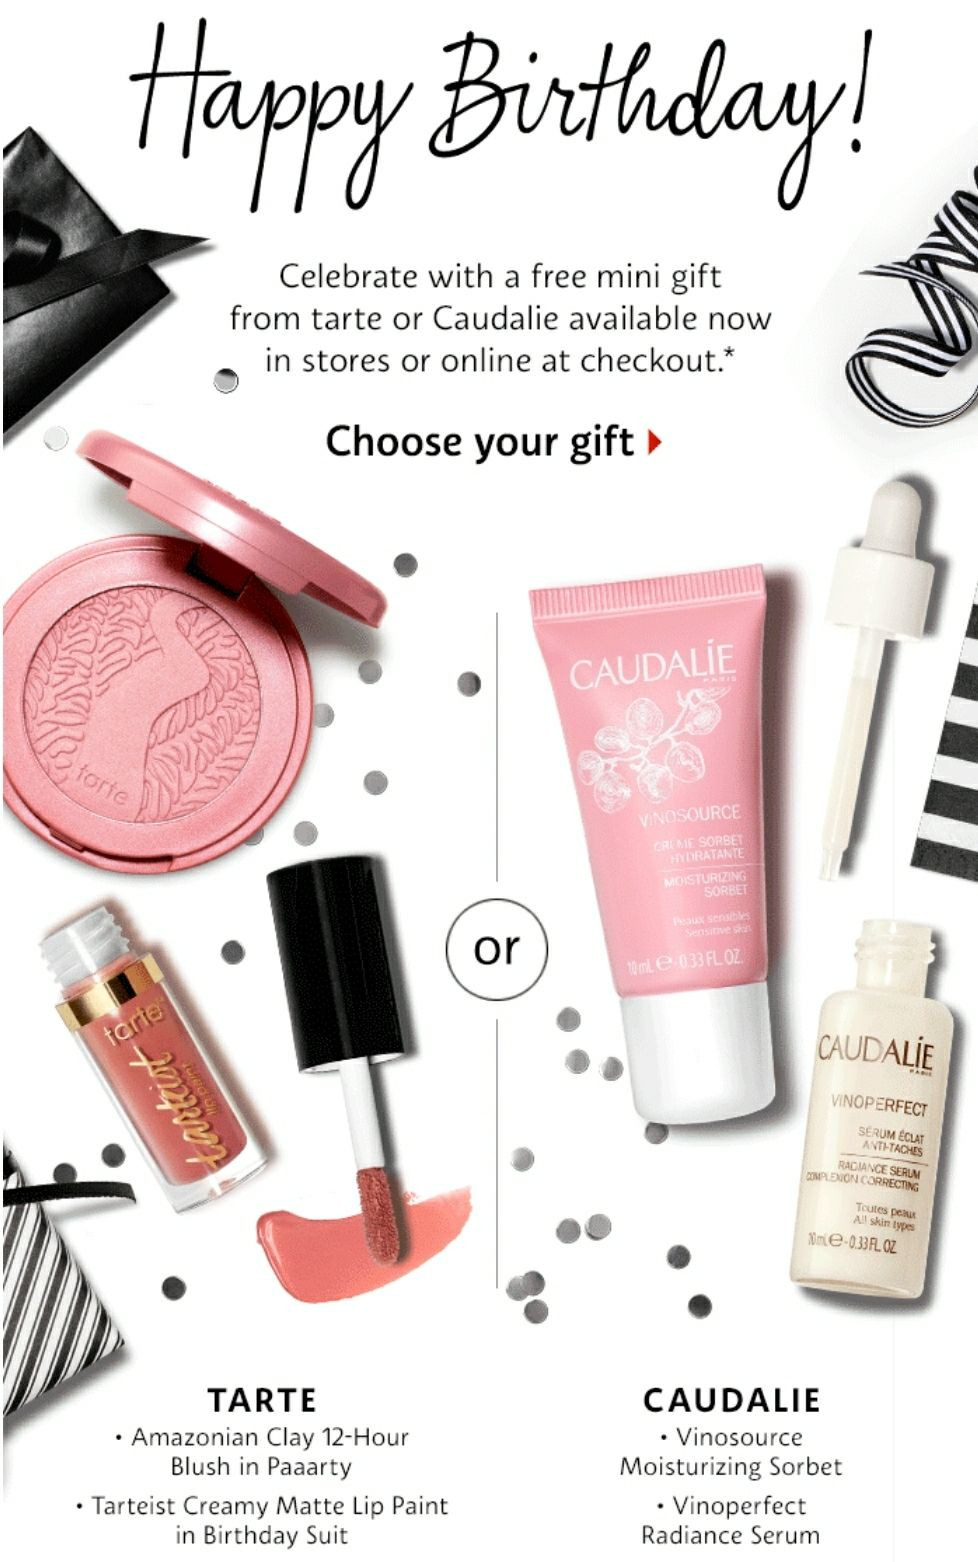 Sephora Free Birthday Gift
 What is the 2017 birthday t Beauty Insider munity